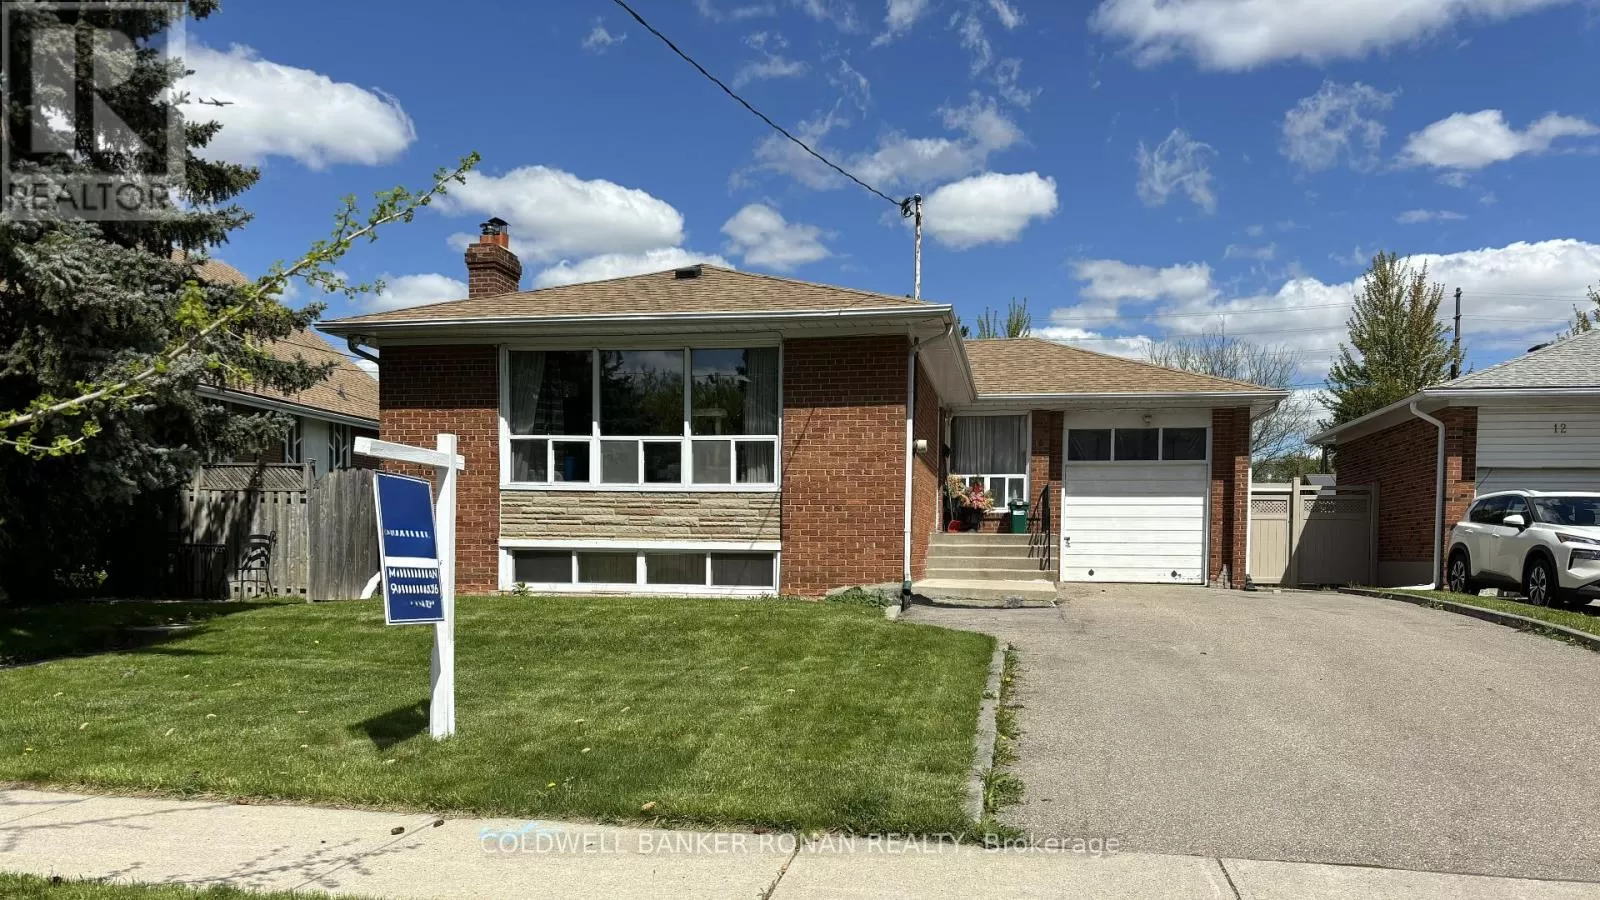 House for rent: 14 Deeth Drive, Toronto, Ontario M9P 2J7